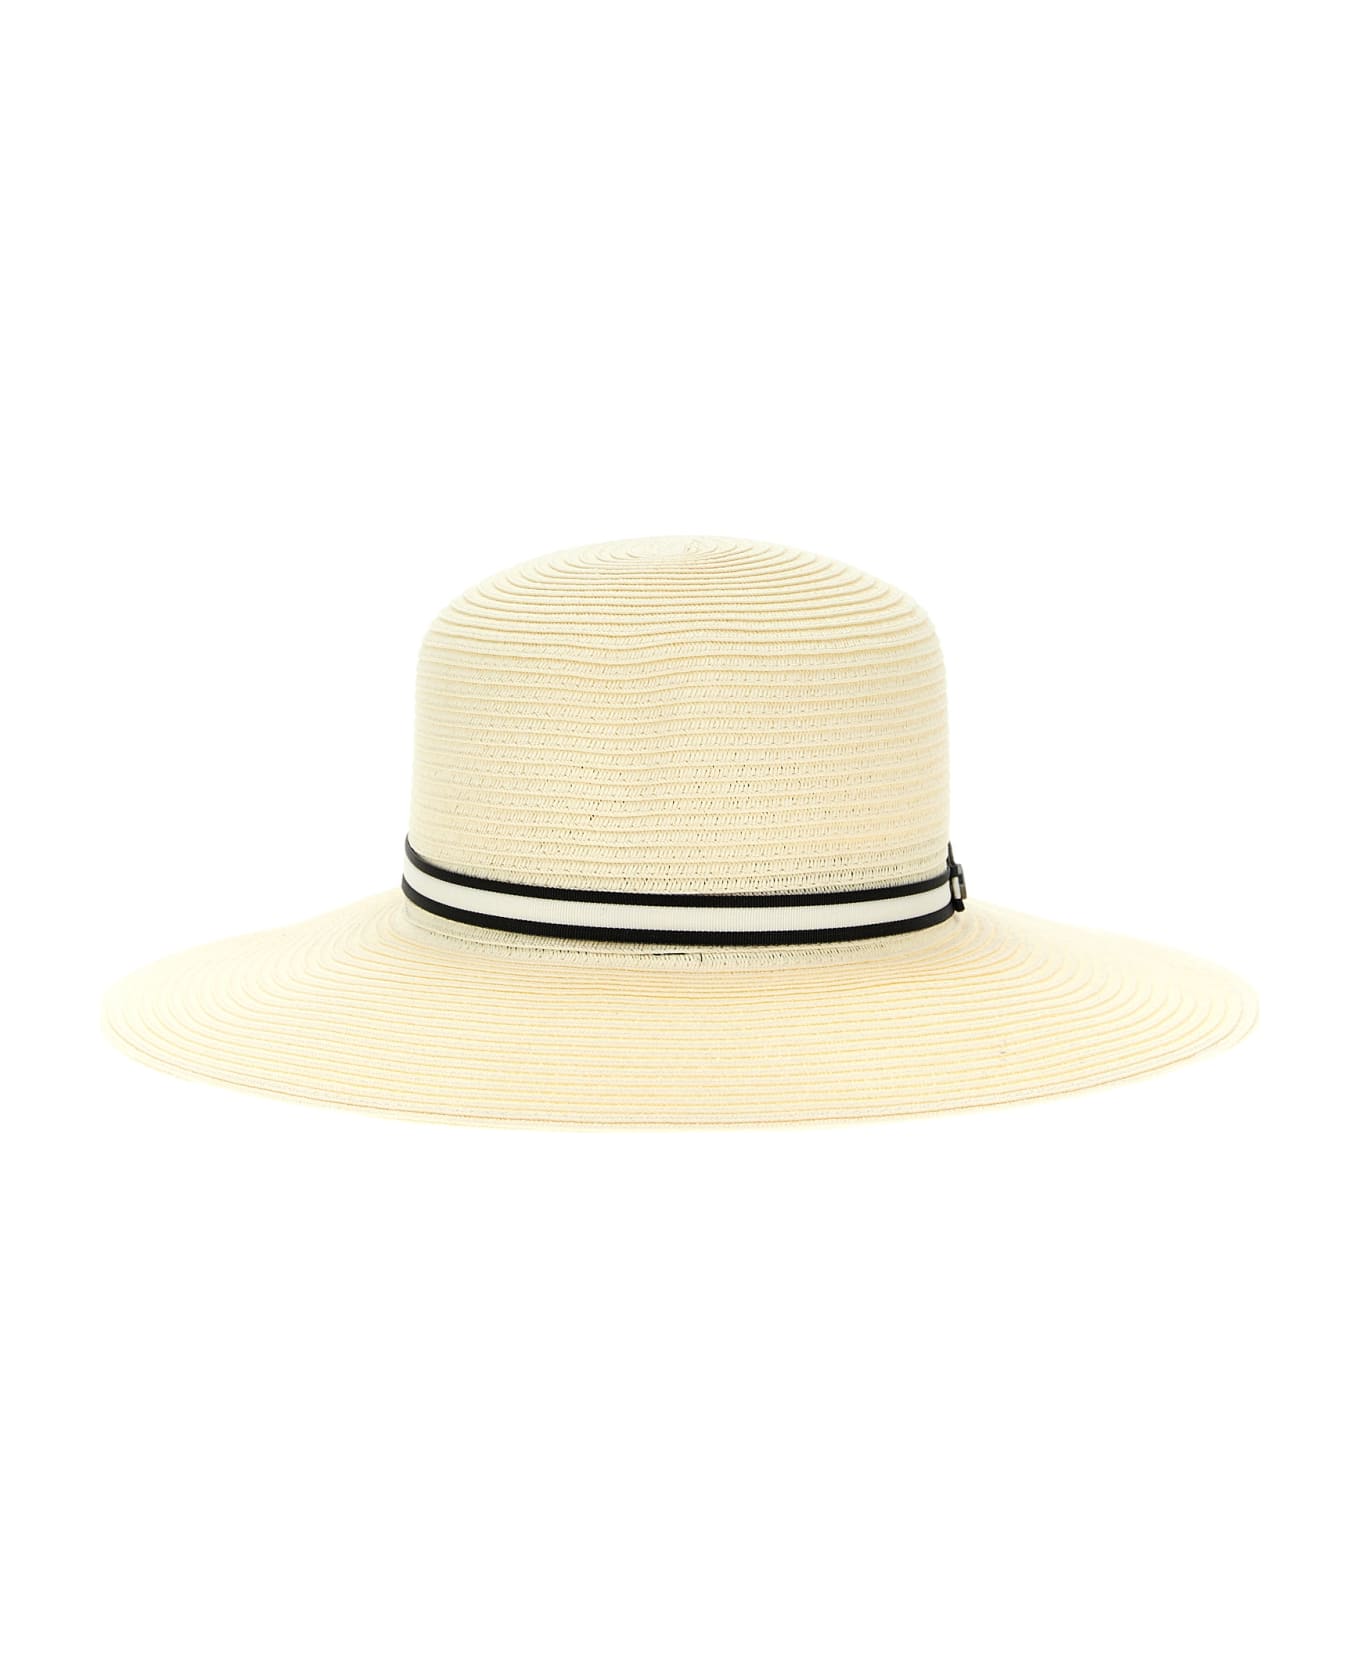 Borsalino 'giselle' Hat - White 帽子